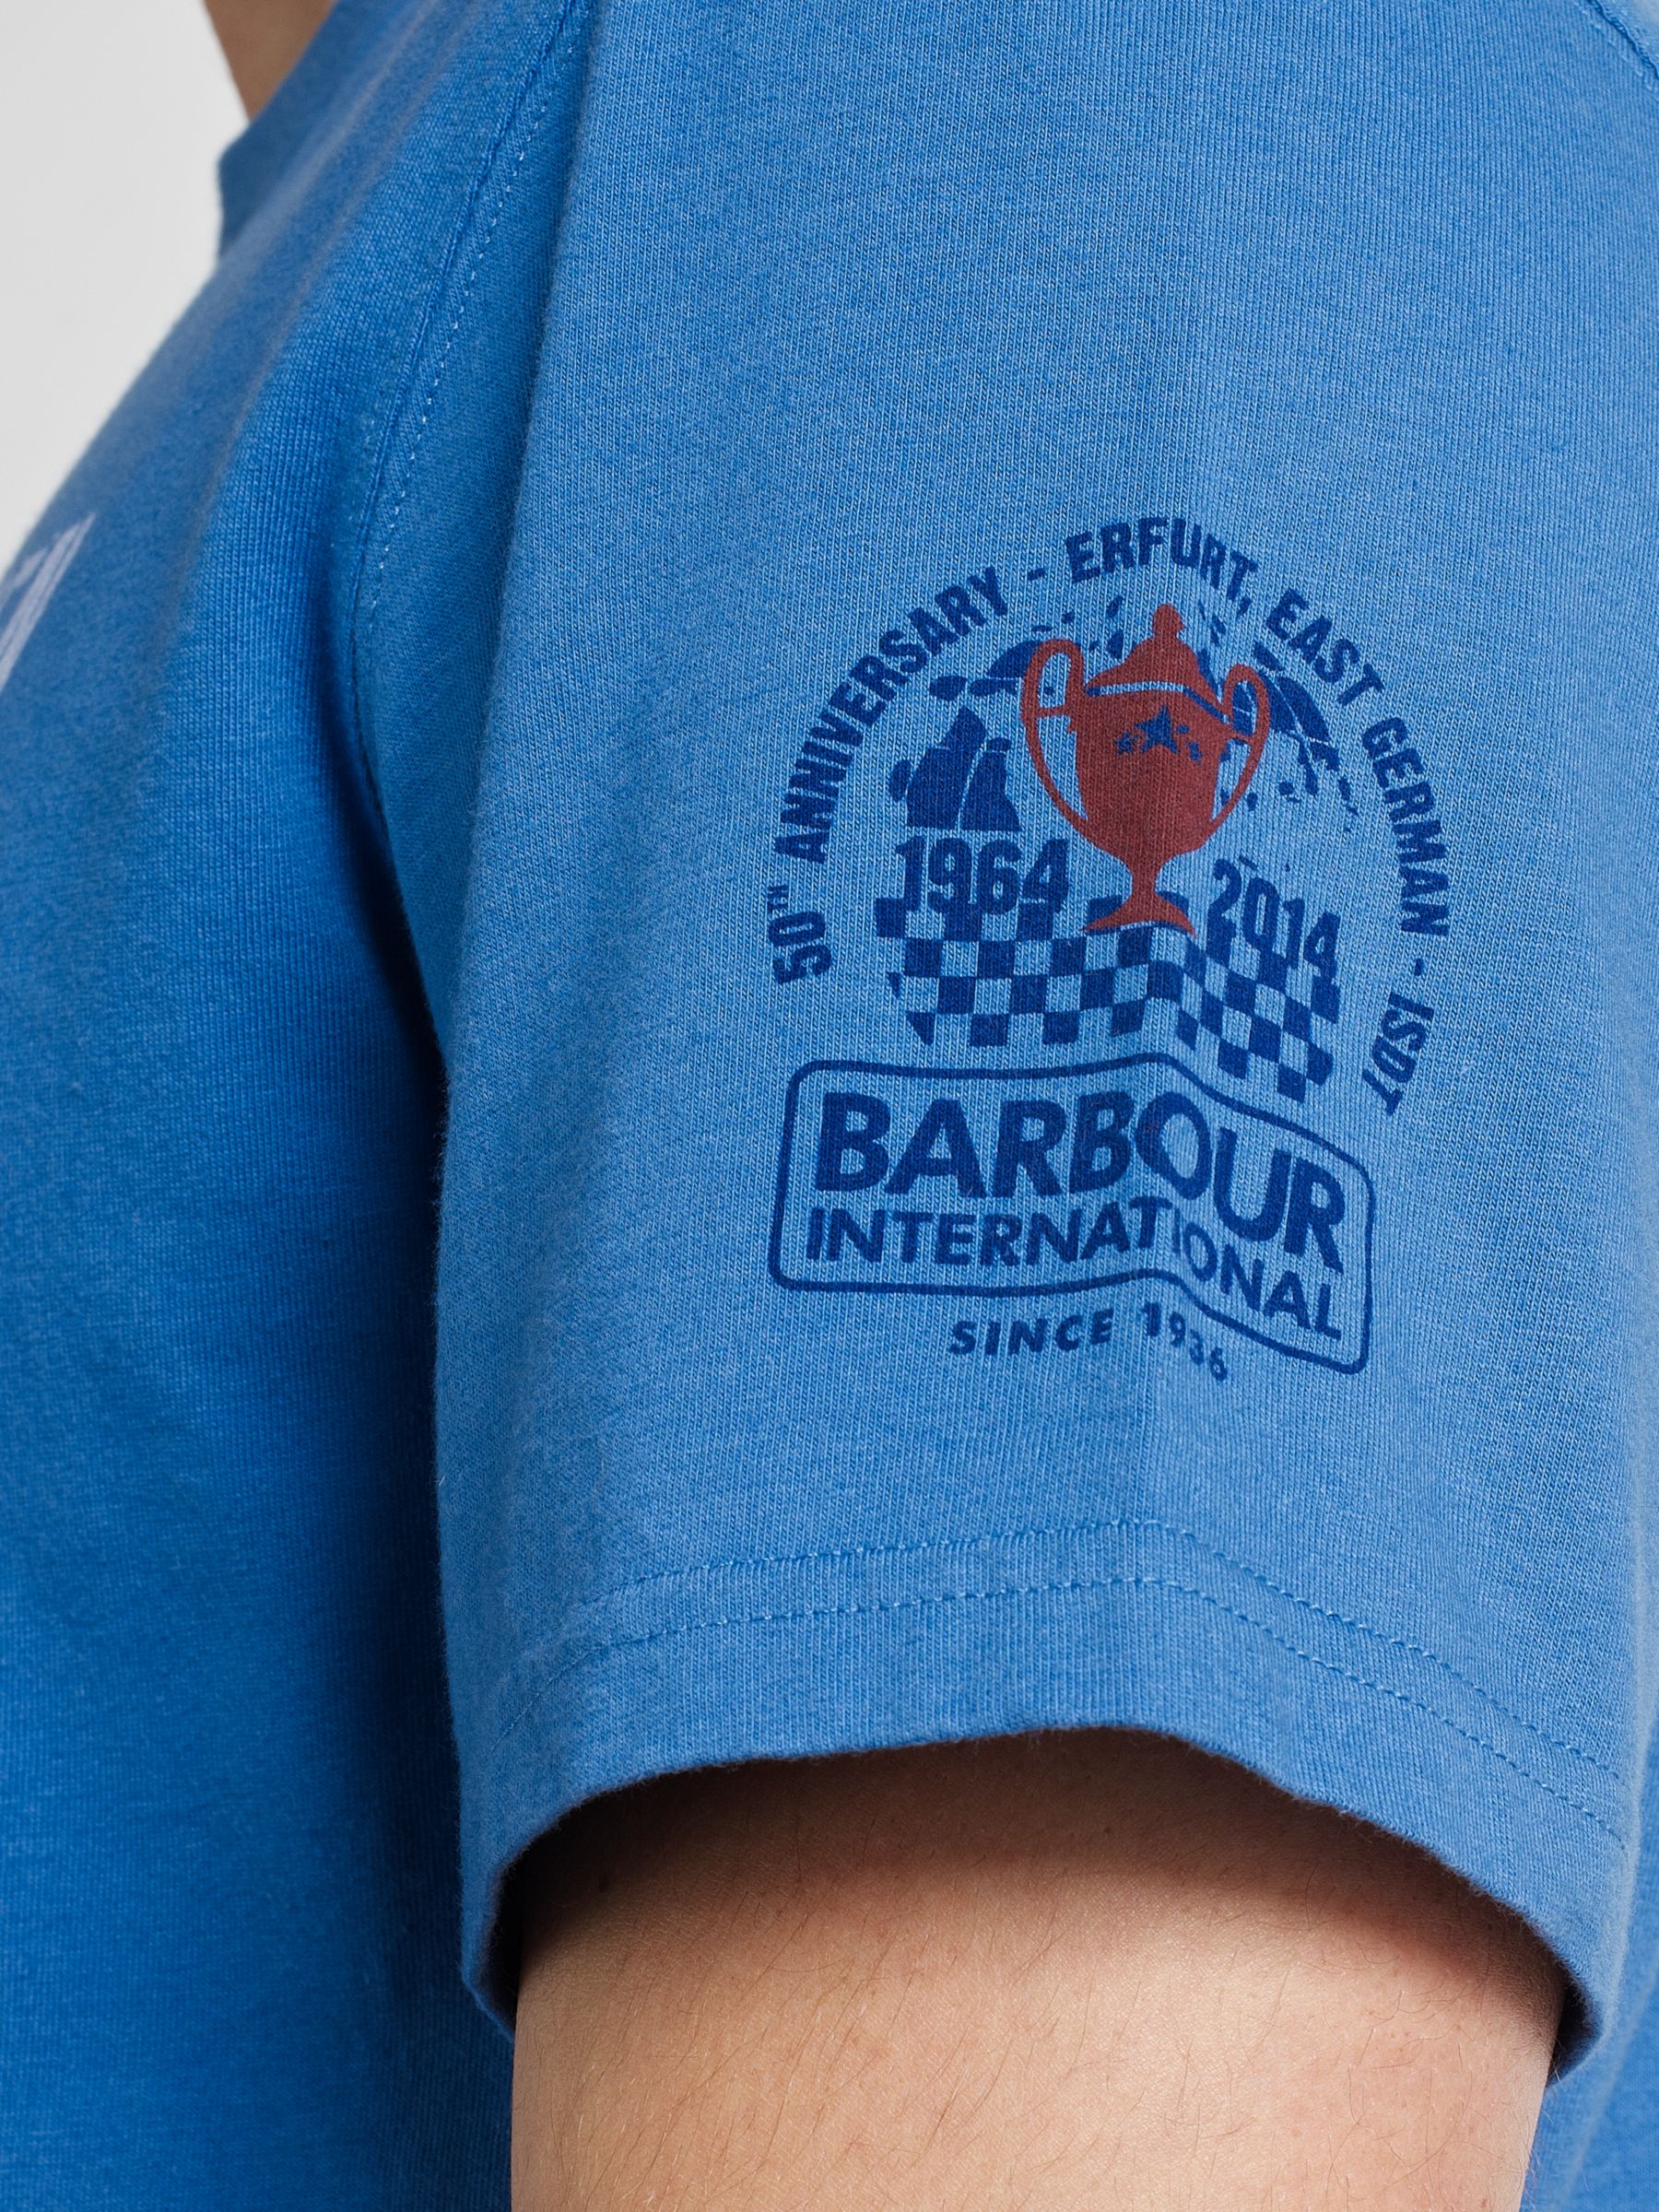 barbour international marine shirt